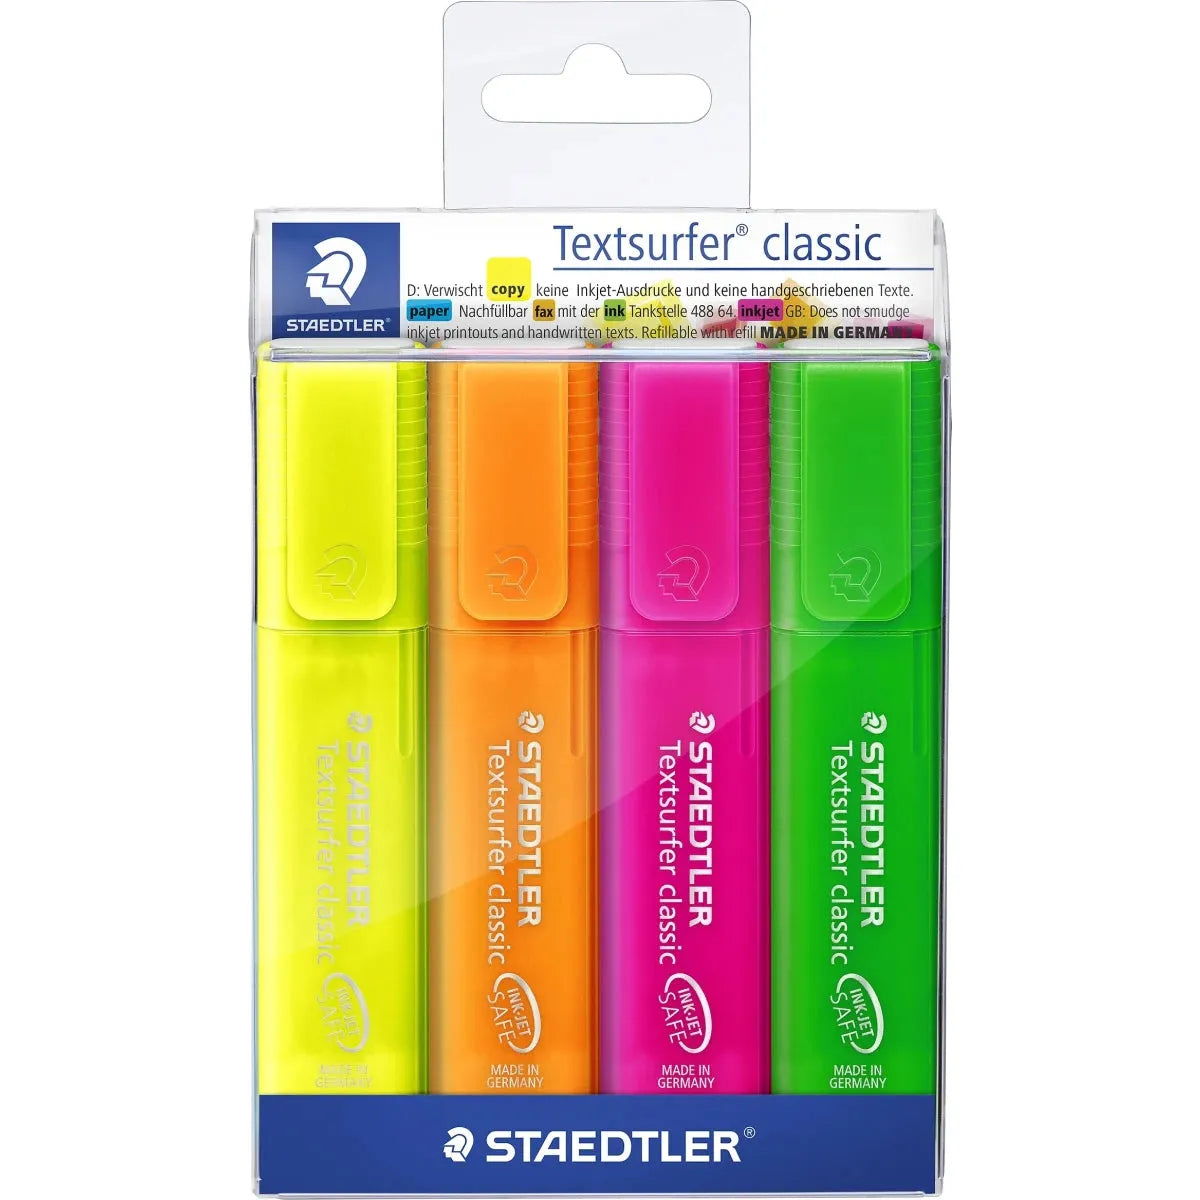 STAEDTLER Textsurfer Classic Highlighter Set of 4 Colour